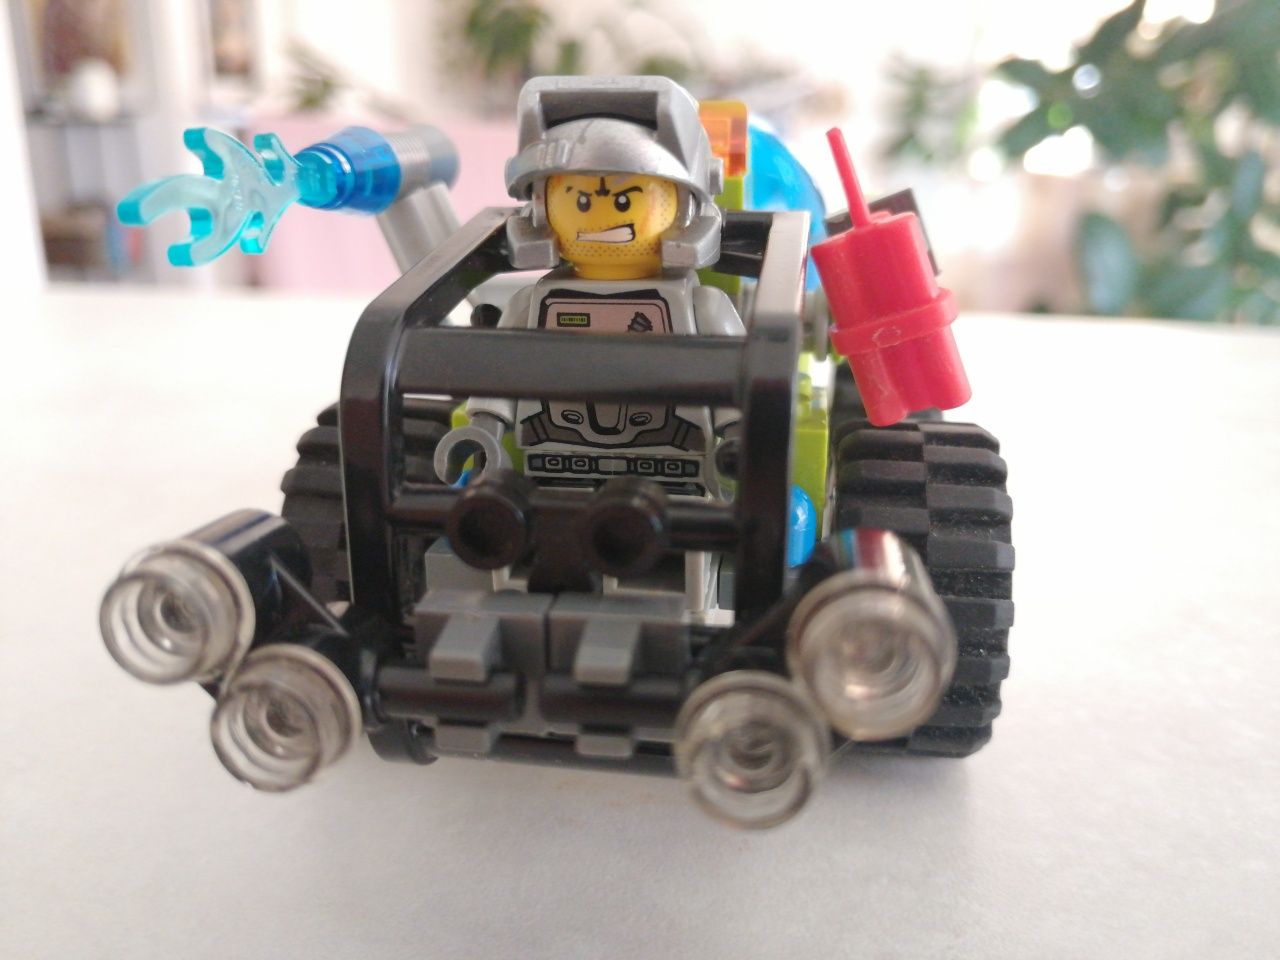 Lego miners 8188